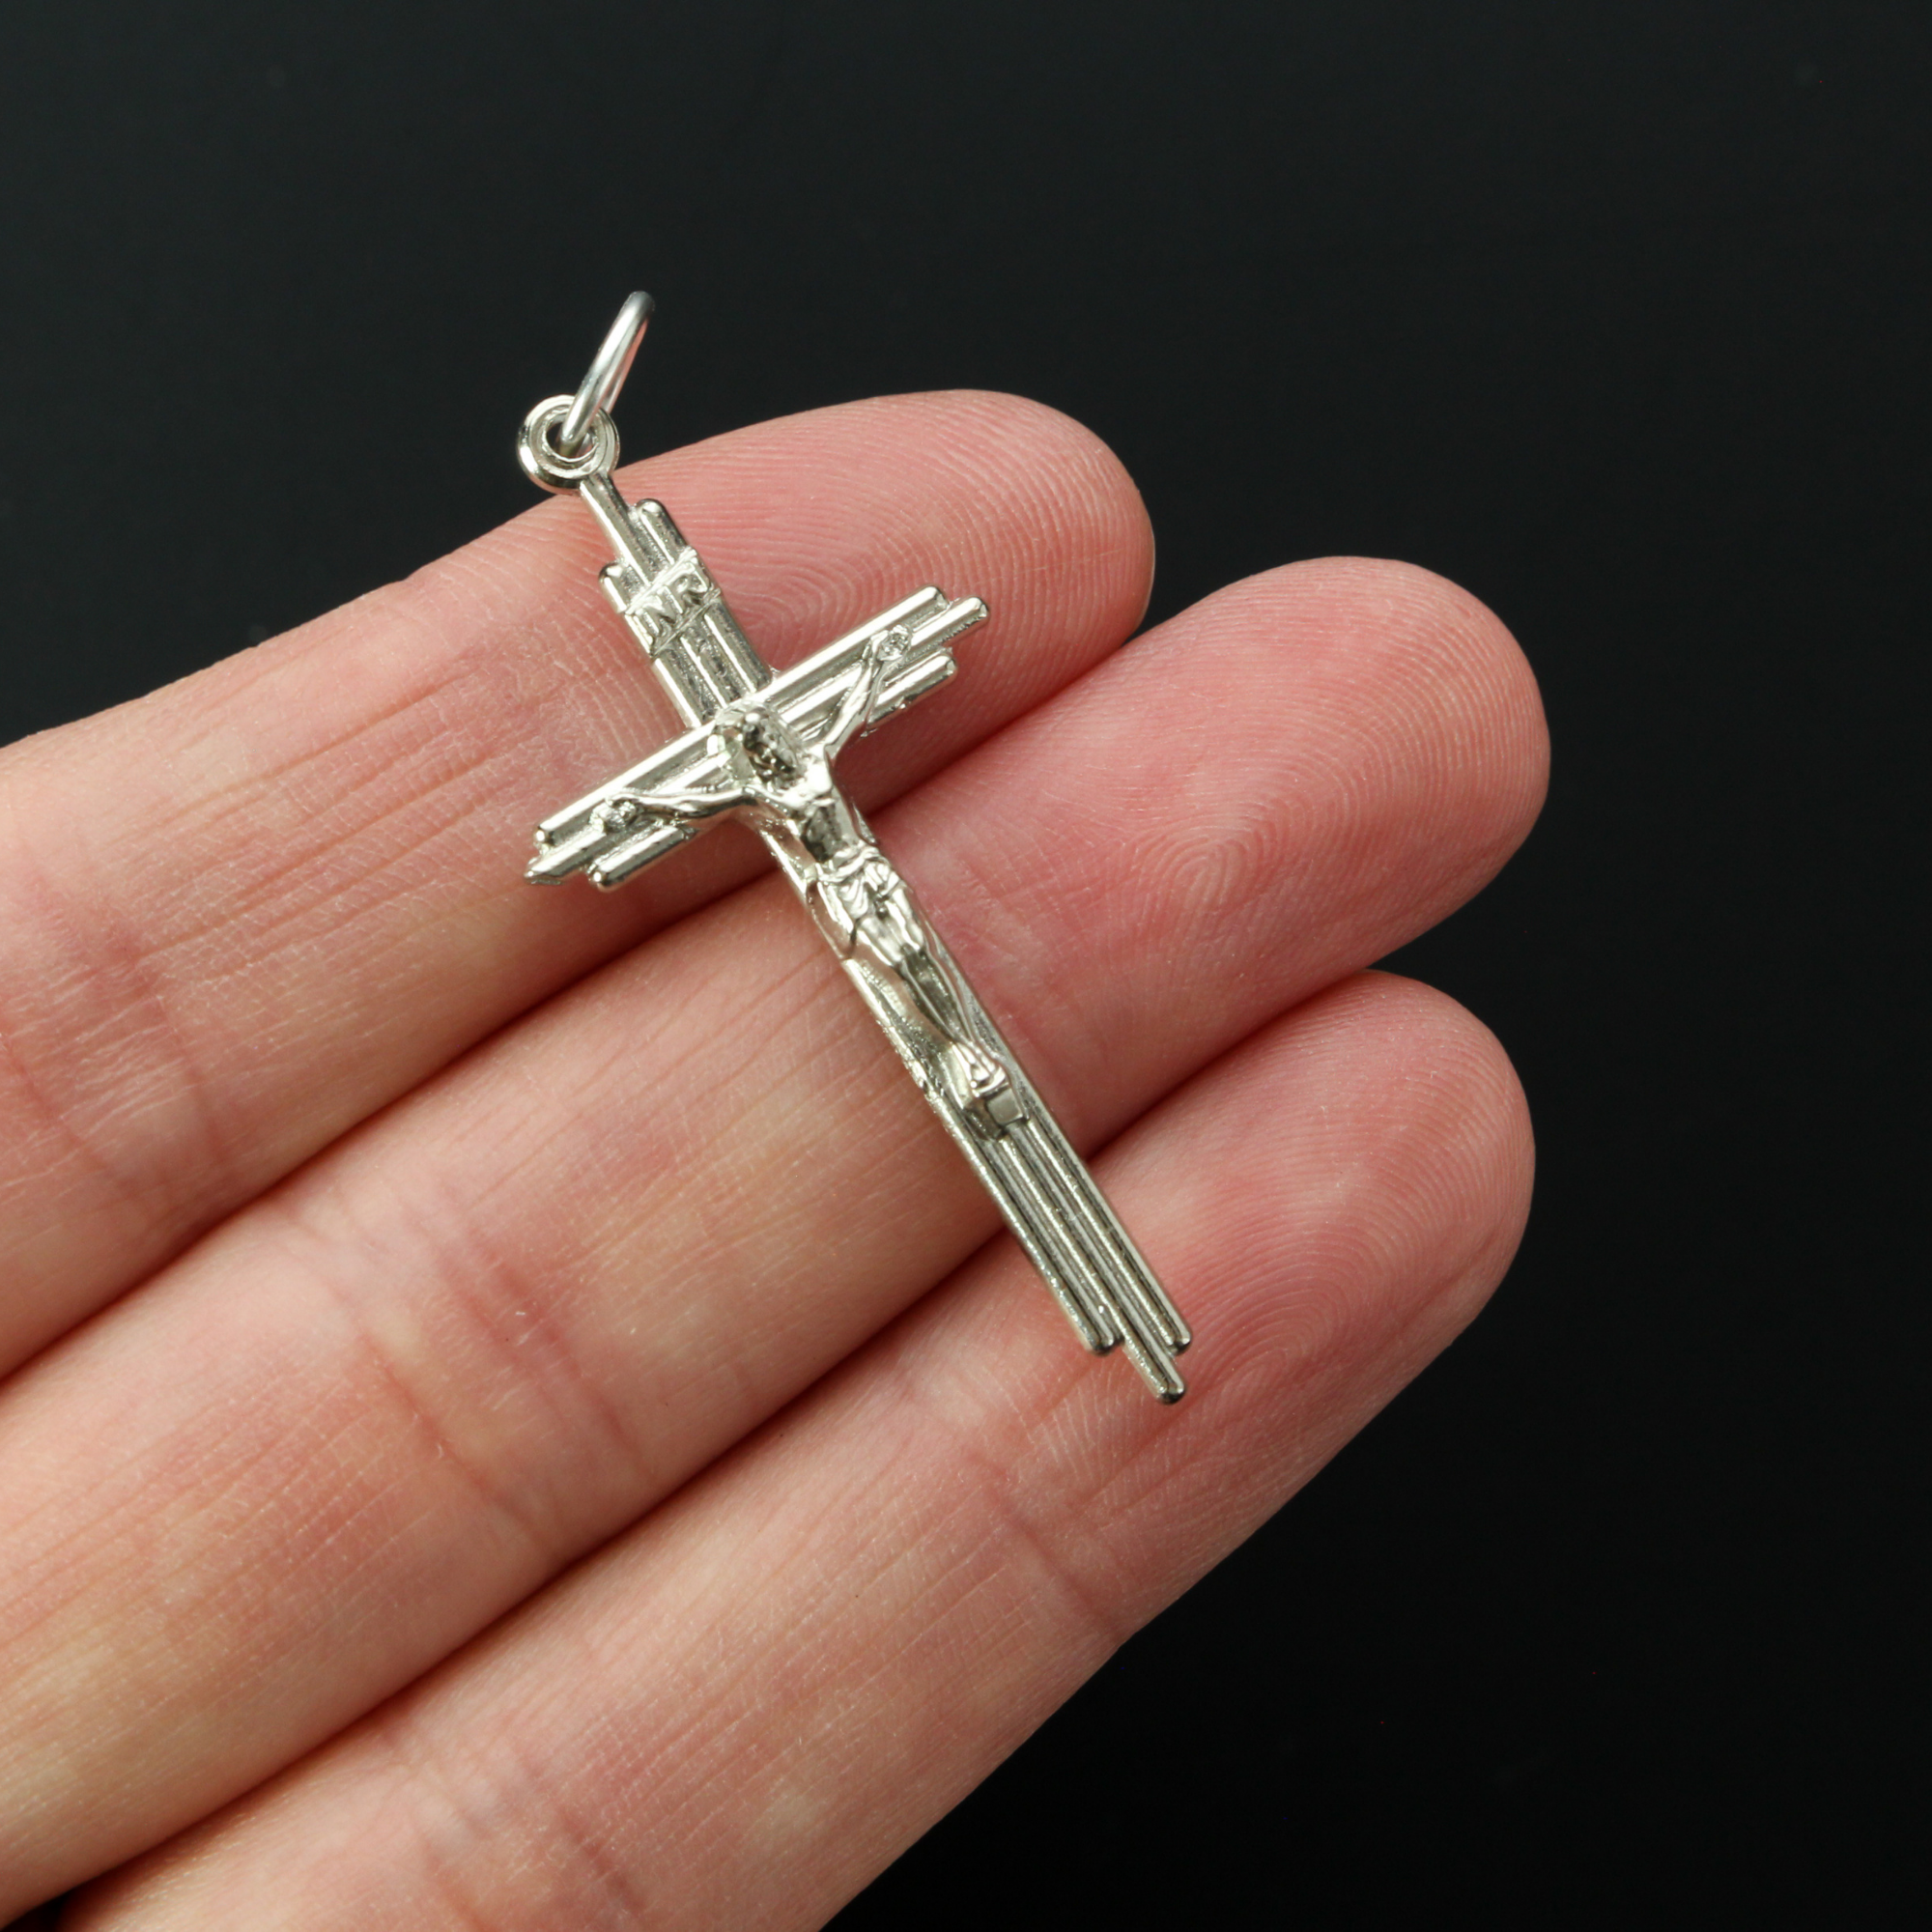 standard vrucifix cross pendant with three bar design